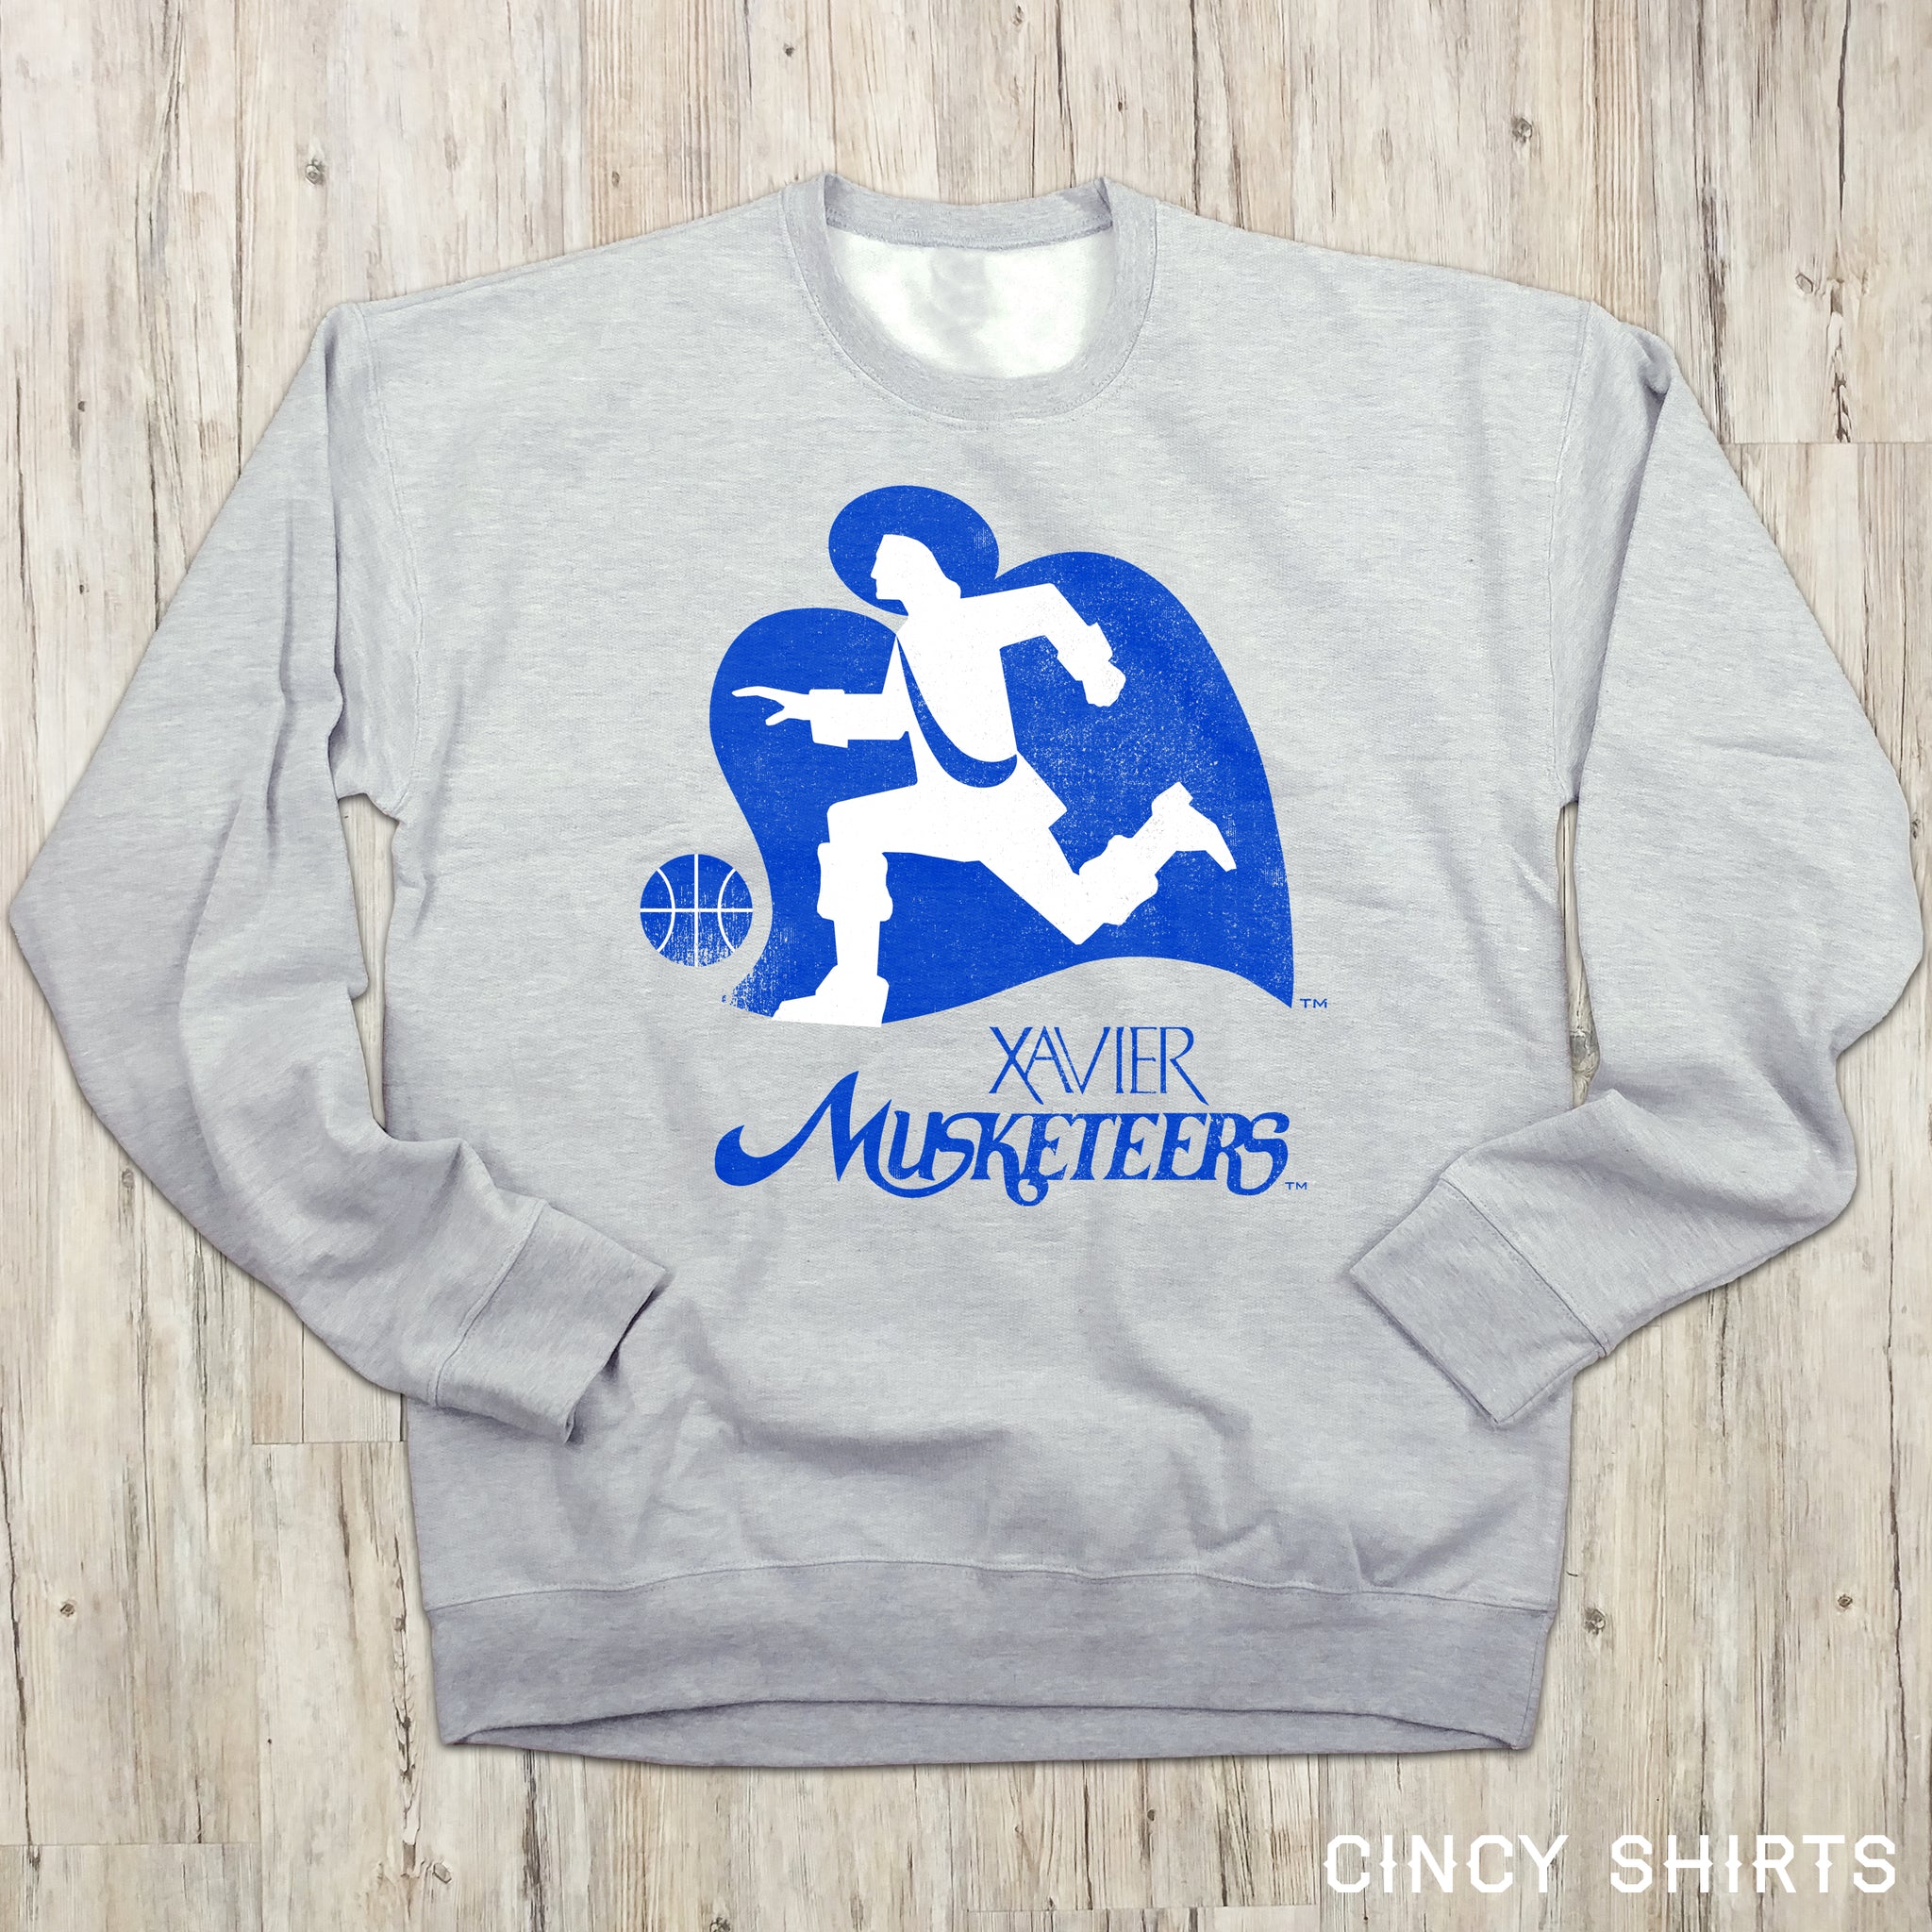 xavier musketeers logo